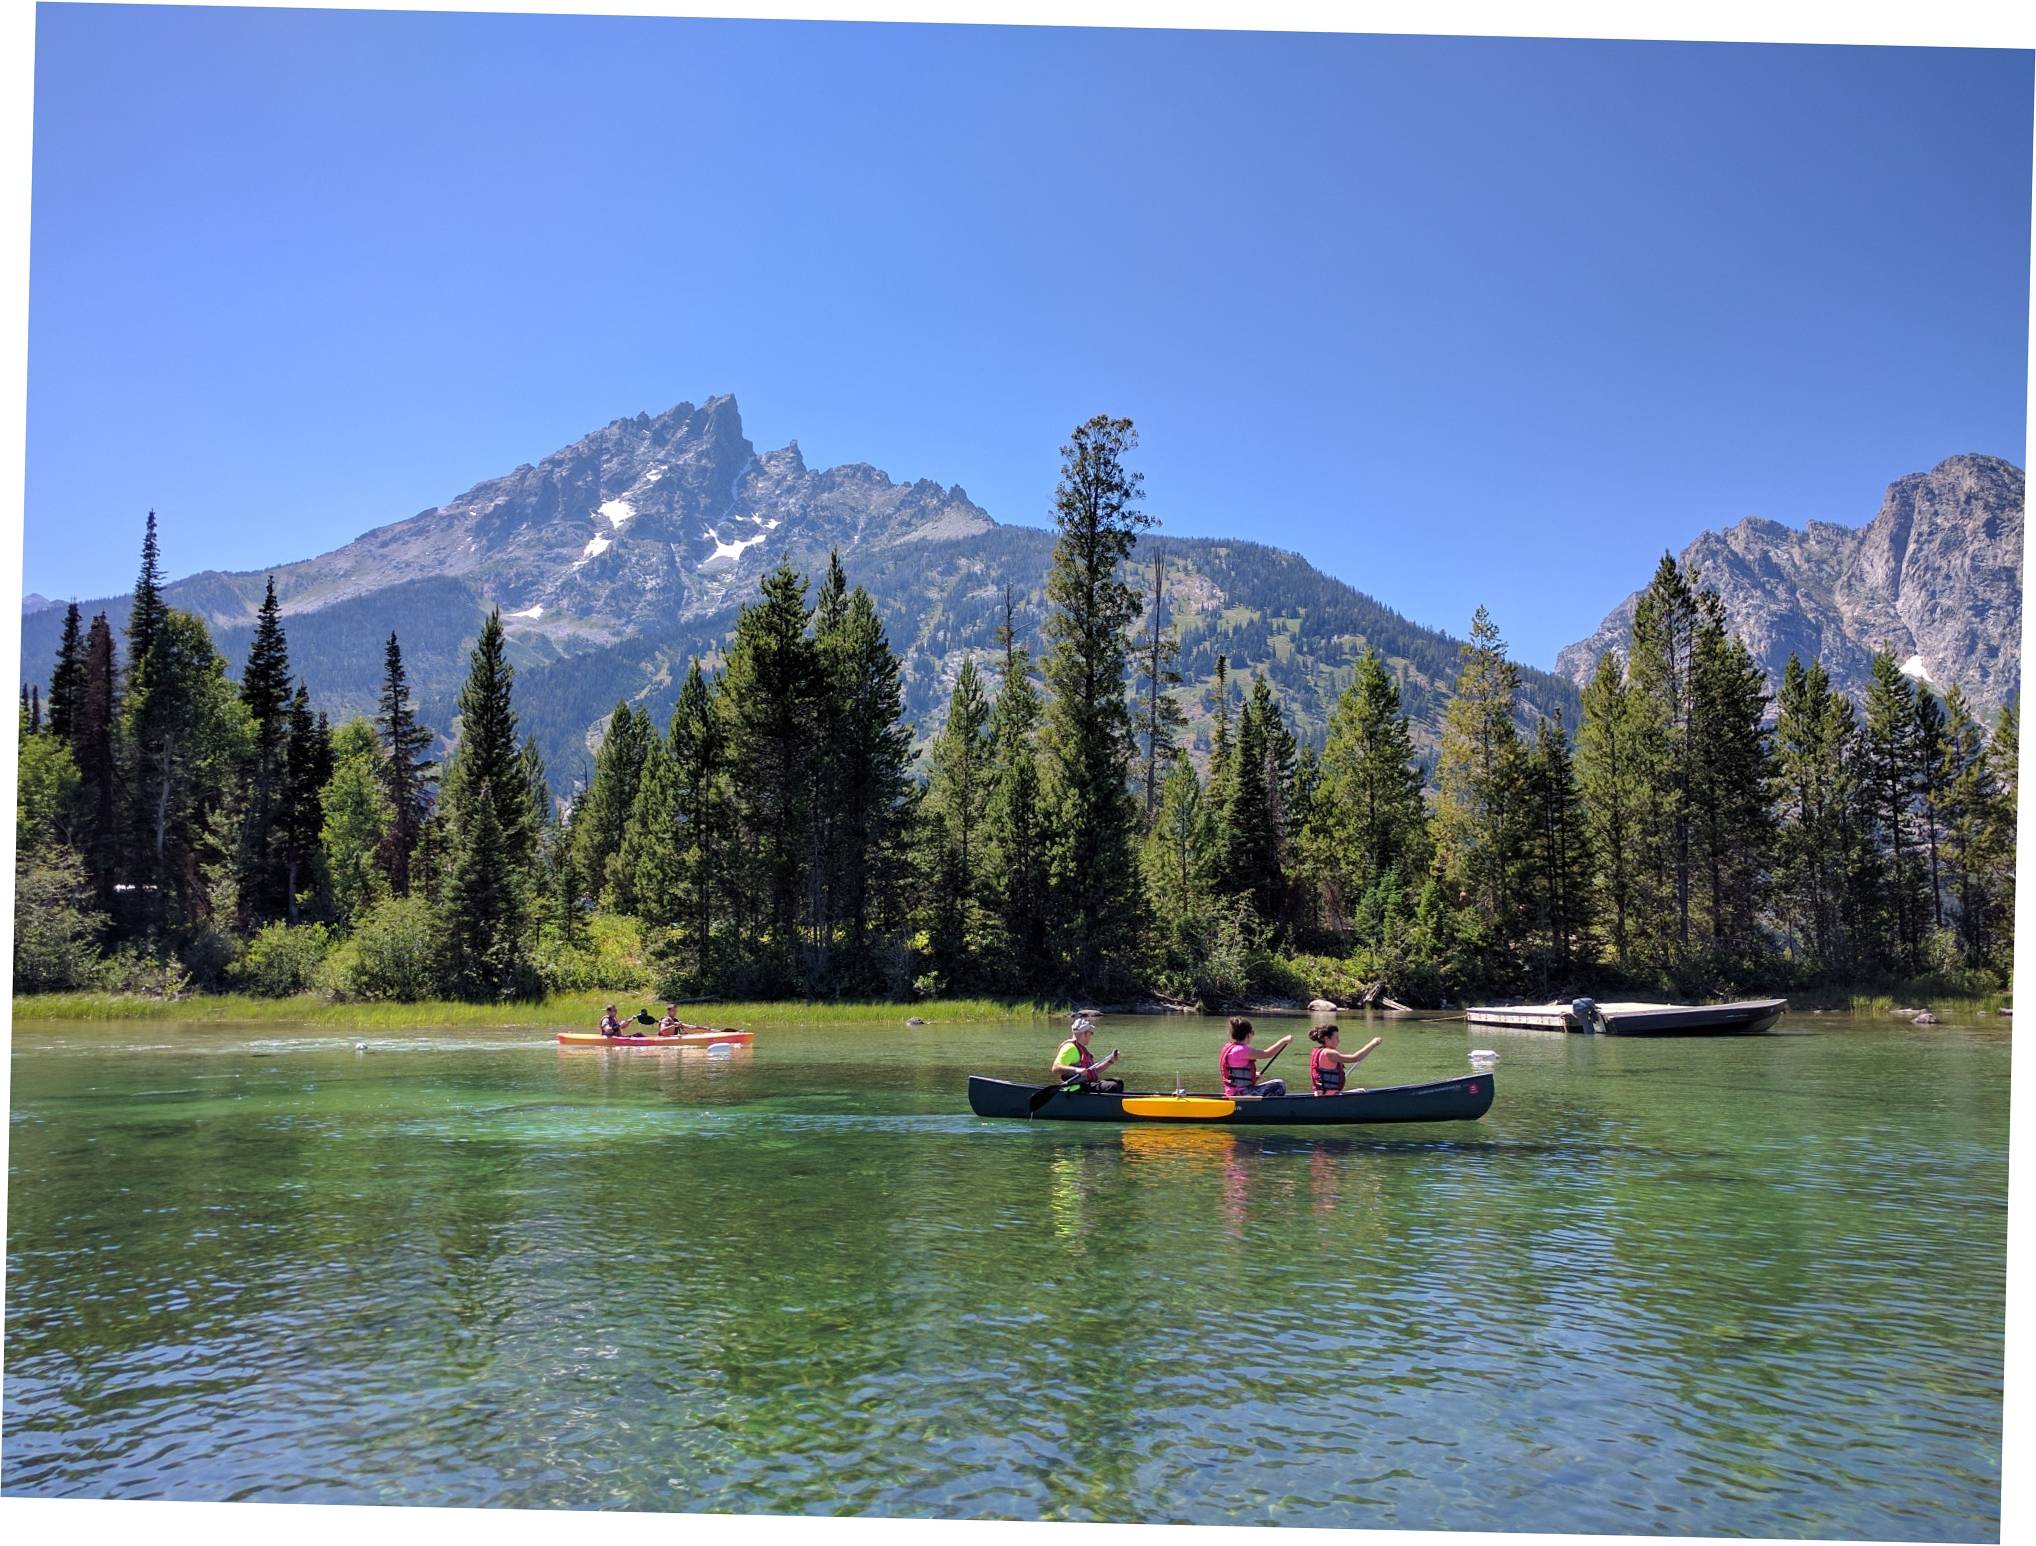 Image: People canoeing at the Jenny Lake